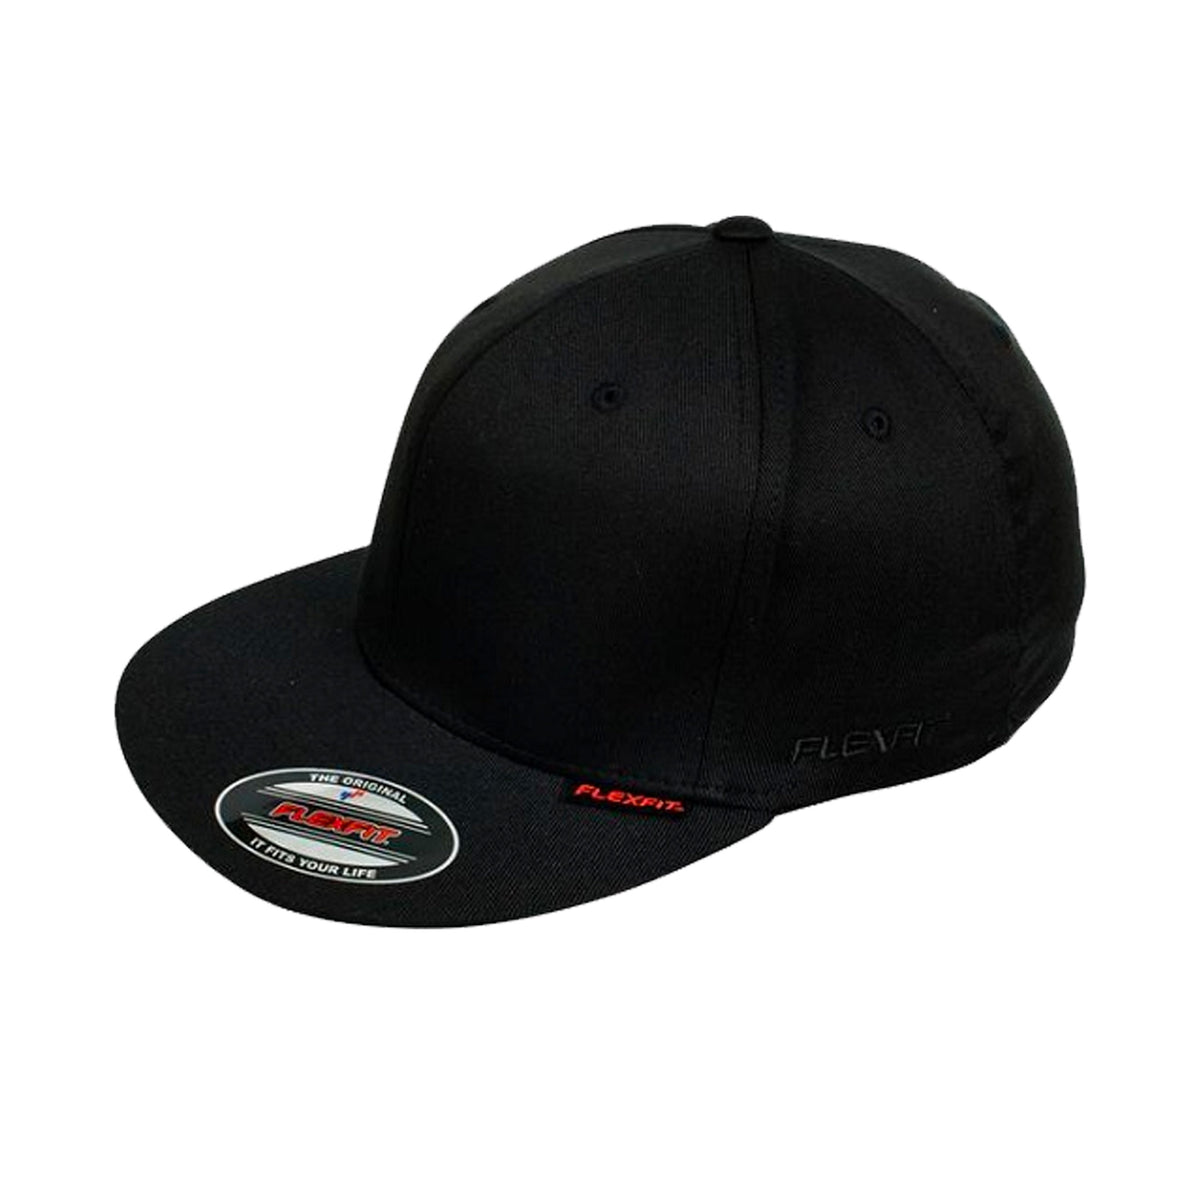 flexfit pro baseball cap in black